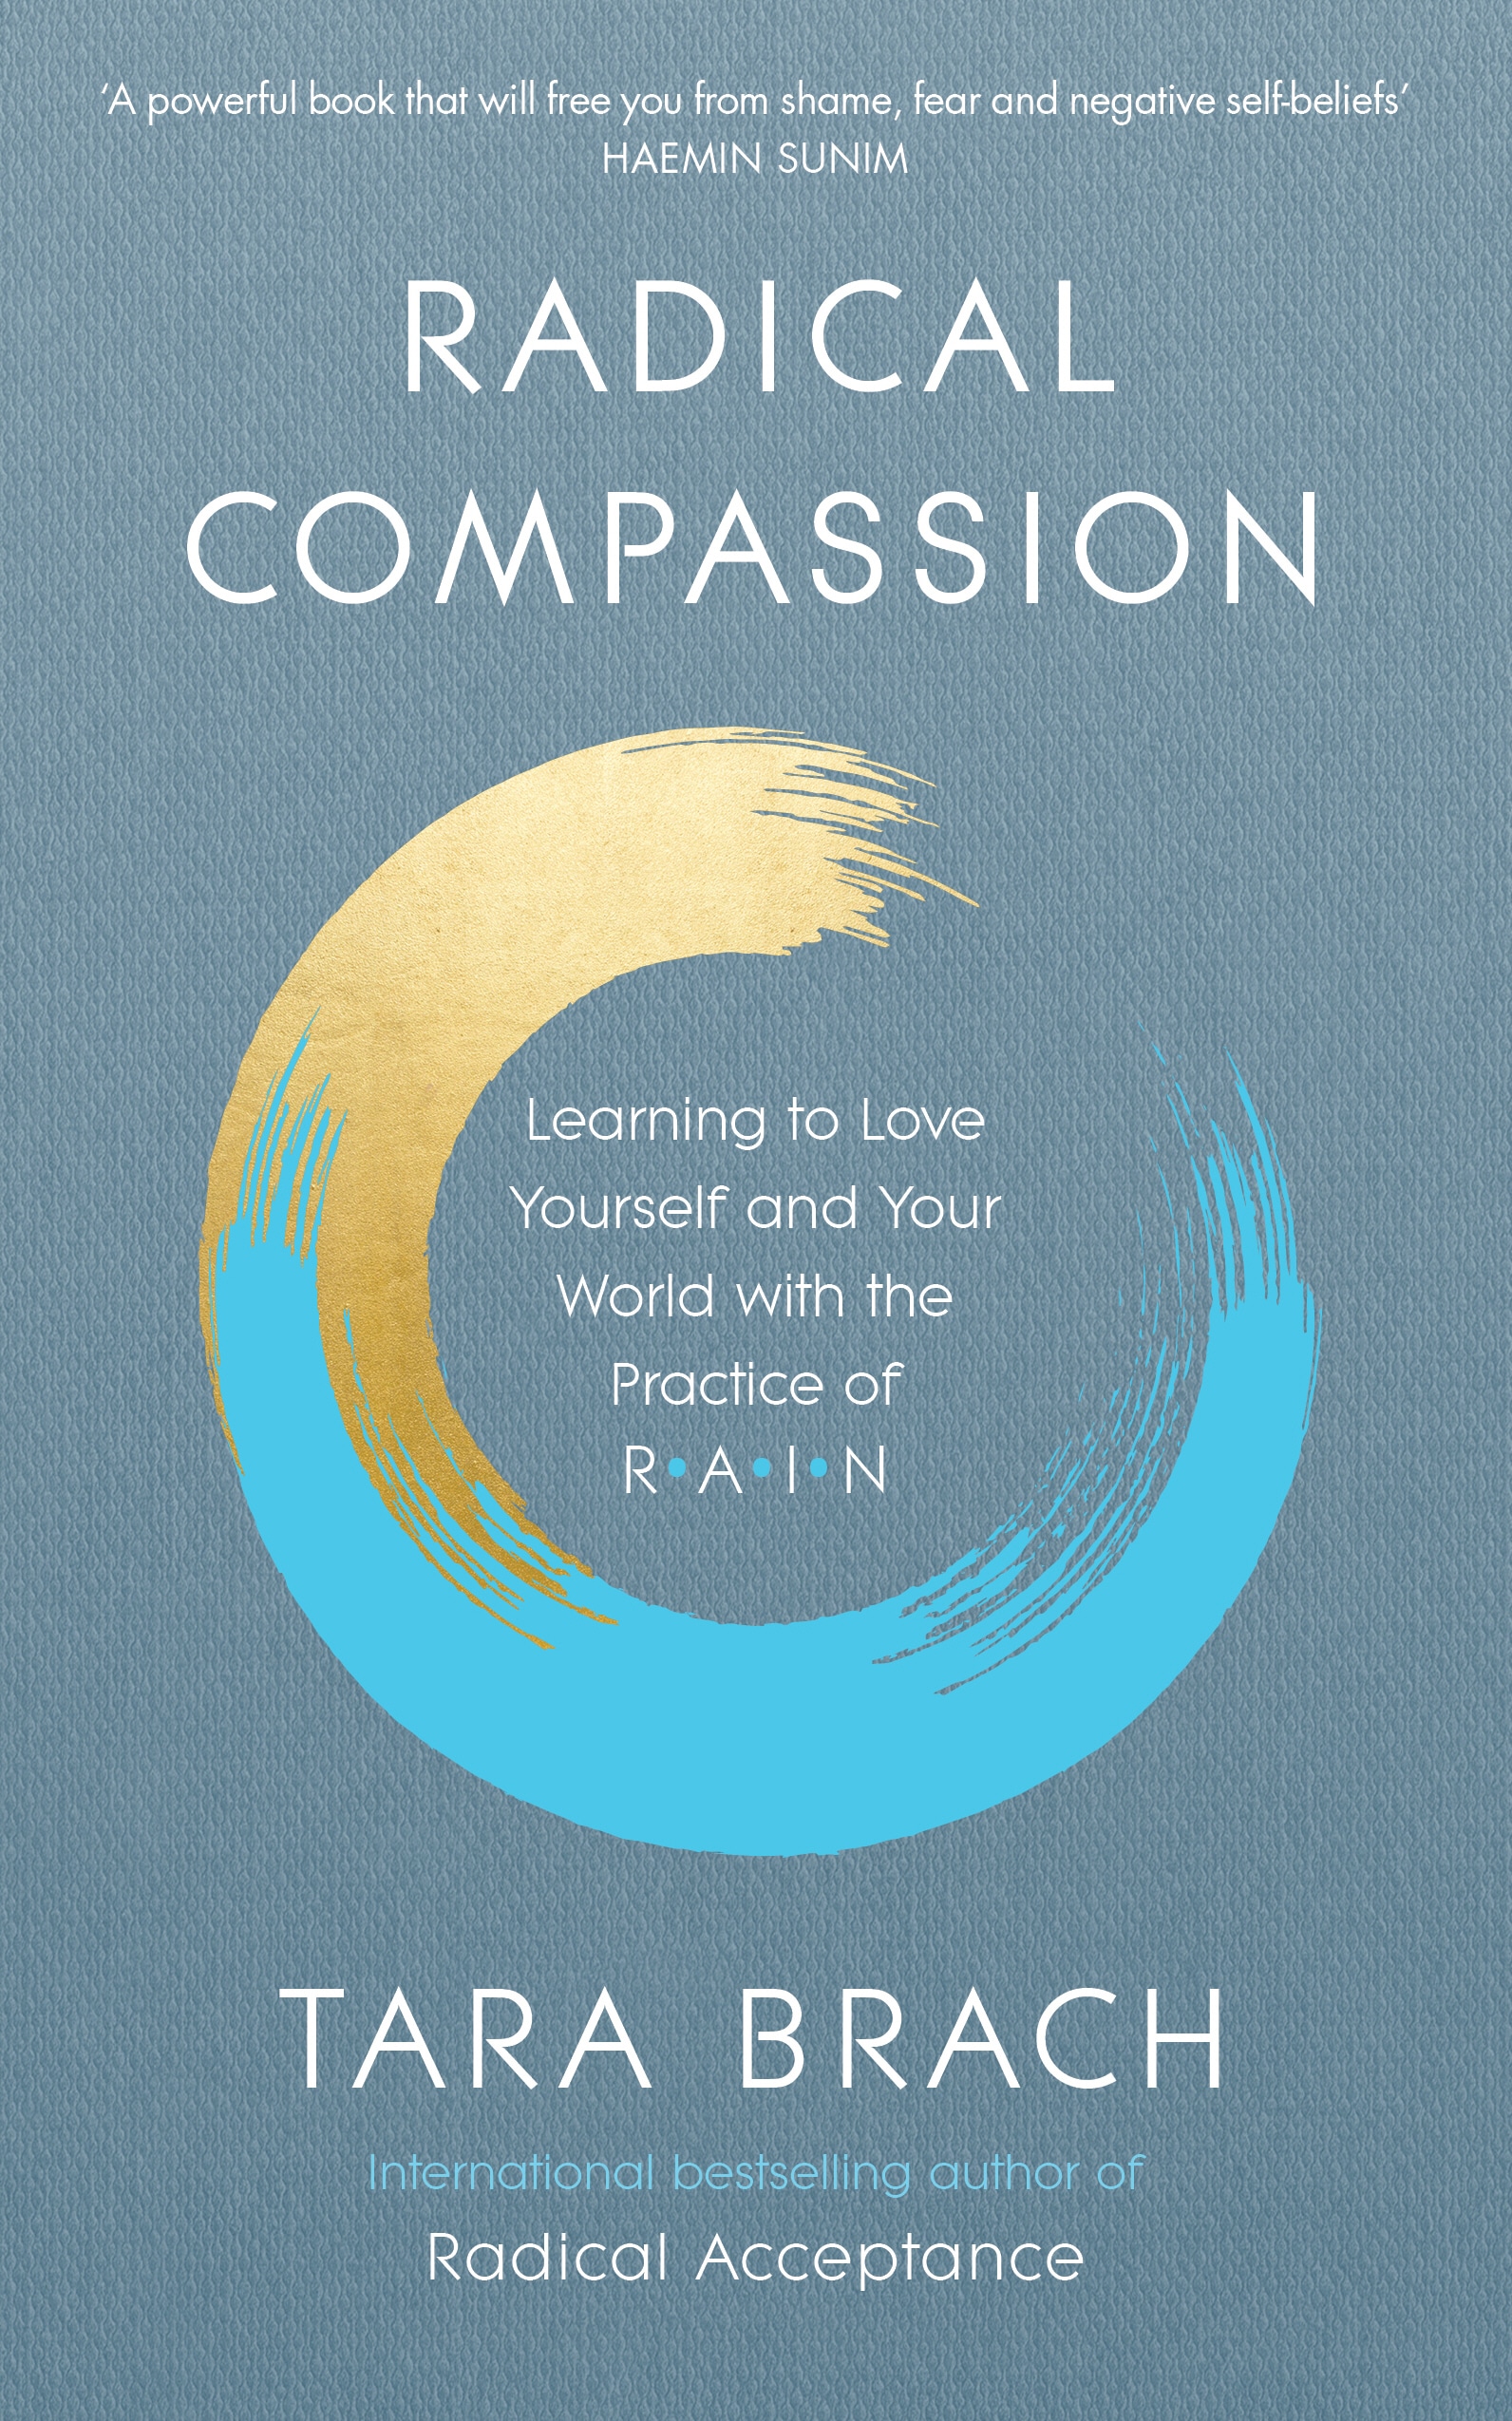 Book “Radical Compassion” by Tara Brach — January 2, 2020